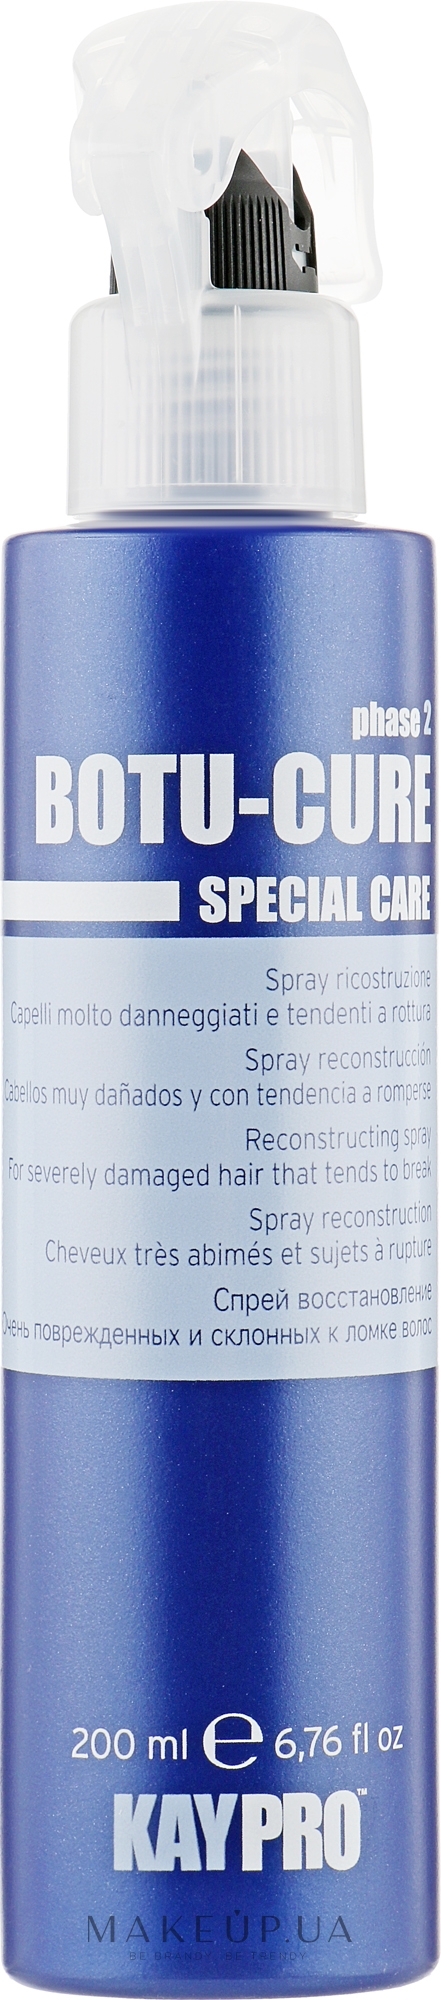 Спрей для реконструкции волос - KayPro Special Care Boto-Cure Spray — фото 200ml